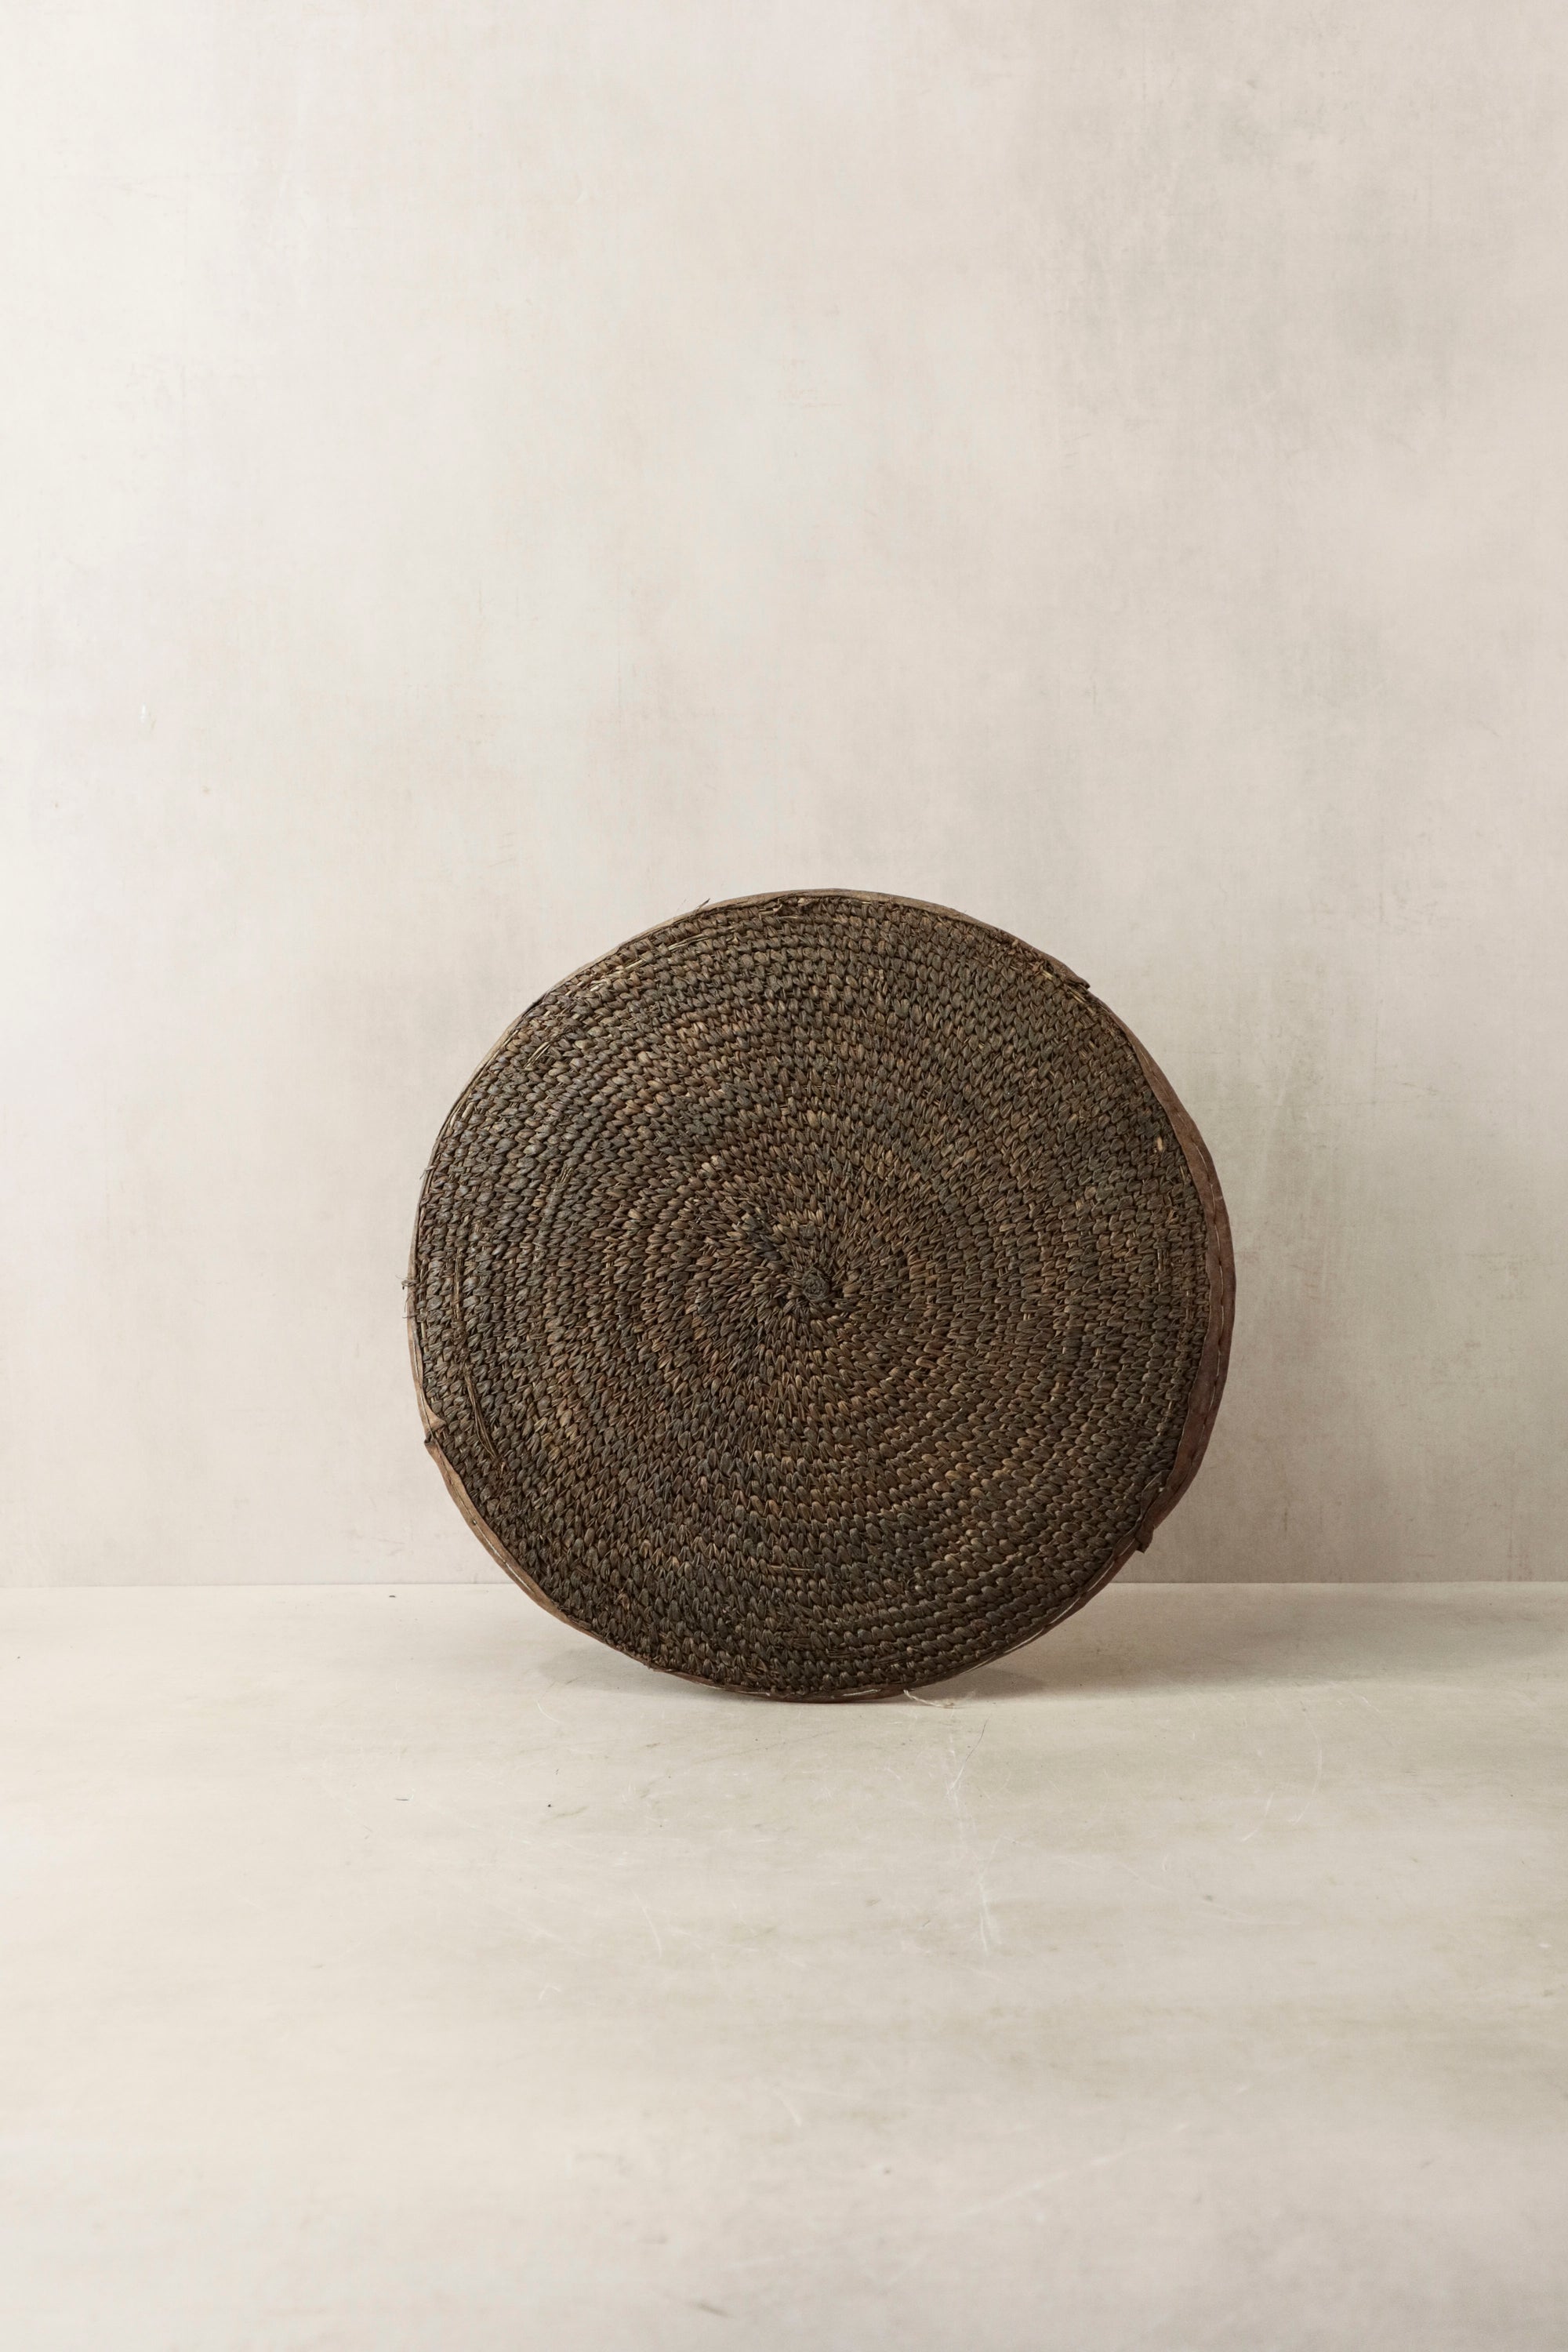 Handwoven Wall Basket - Chad - 41.2